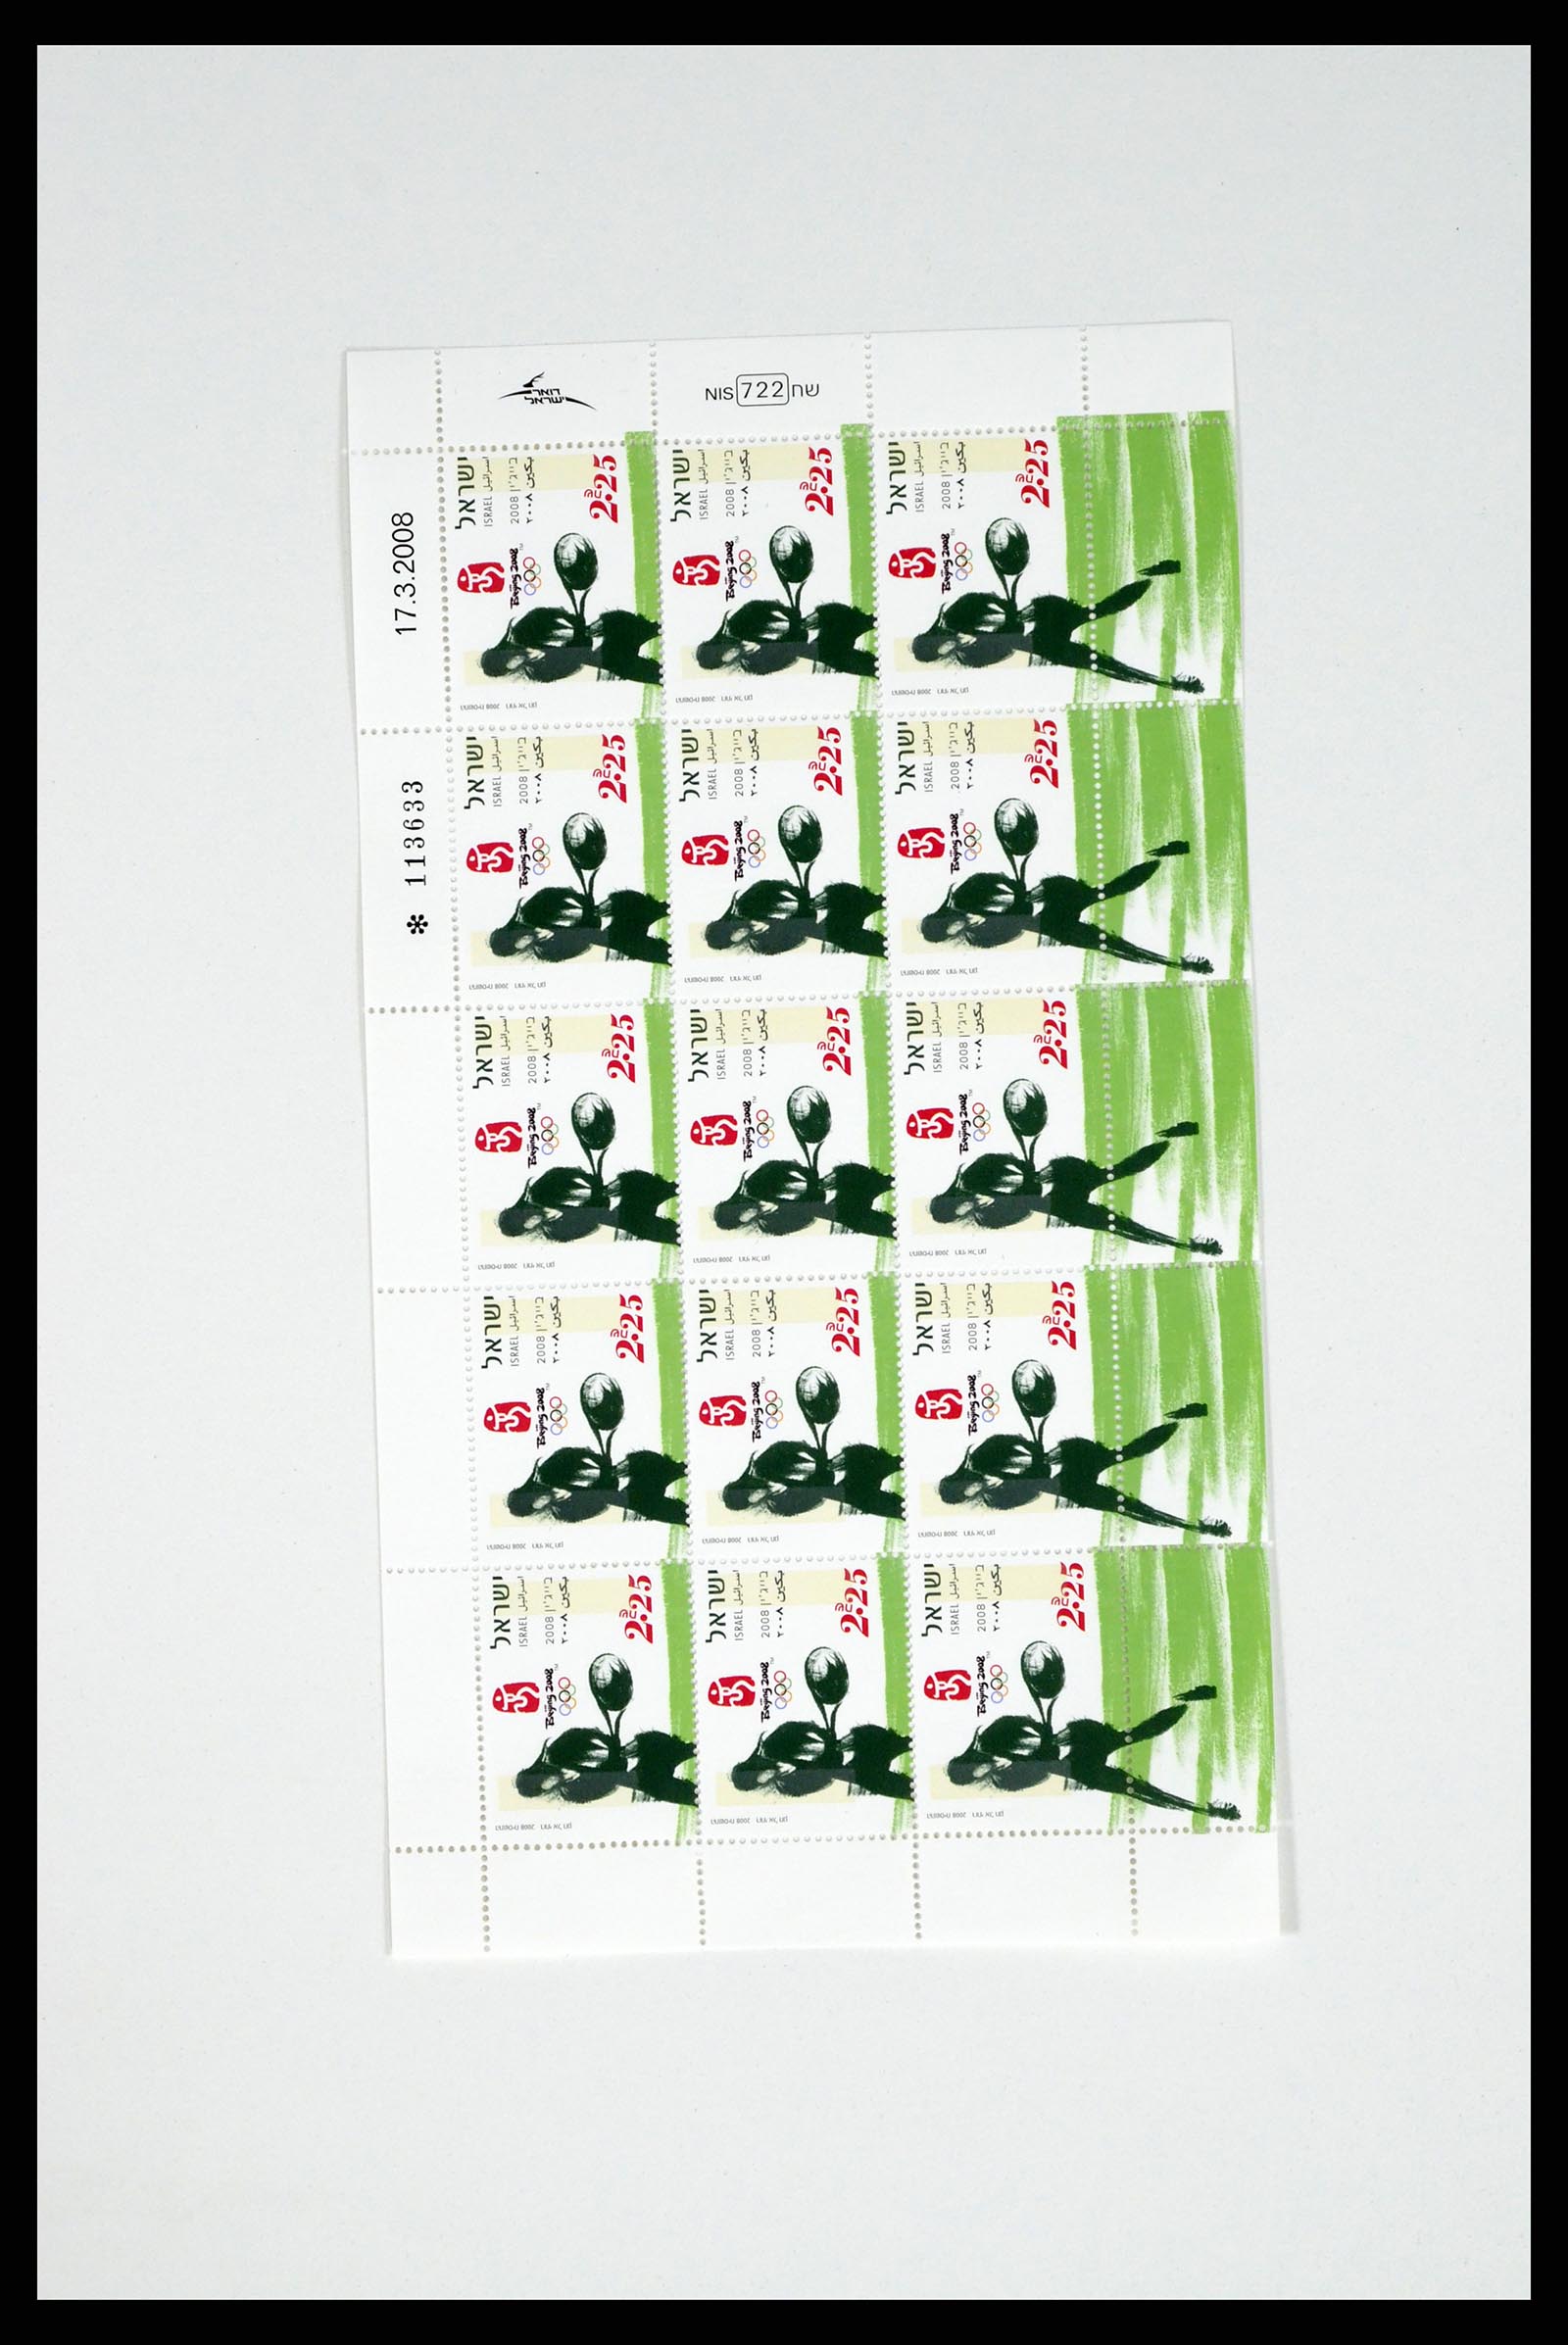 37779 061 - Stamp collection 37779 Israel sheetlets 1986-2009.